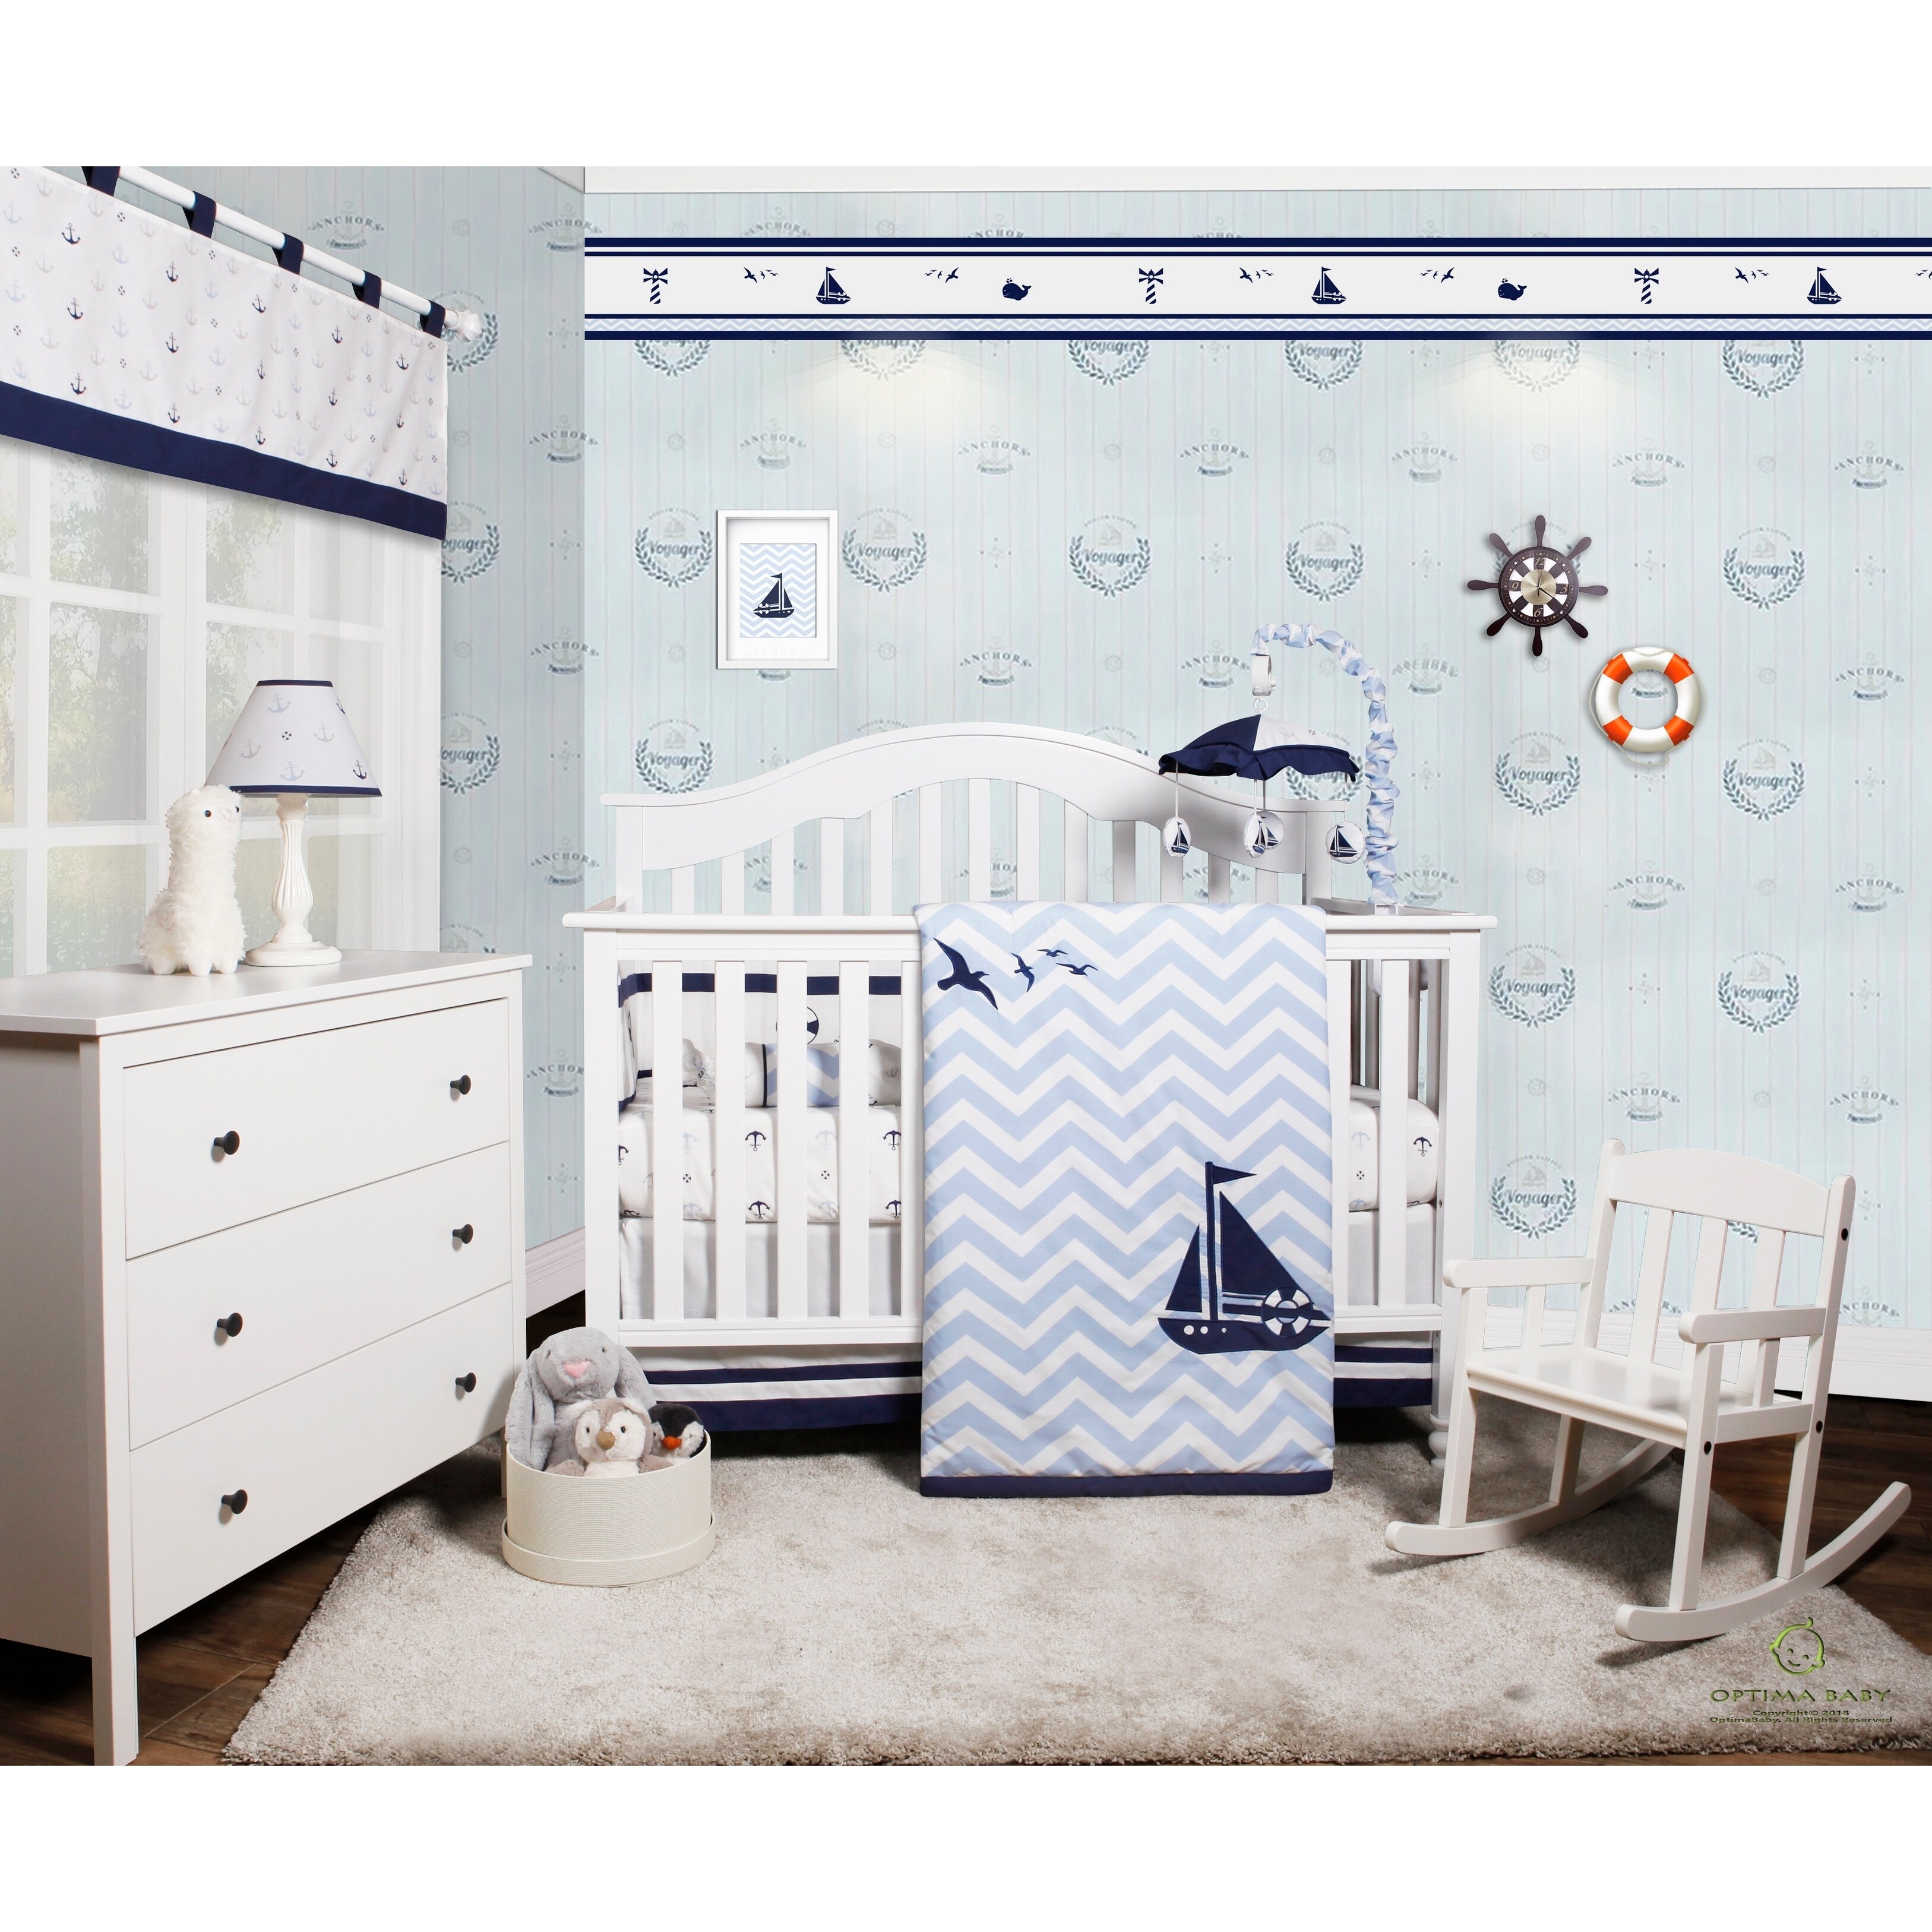 sailor baby room